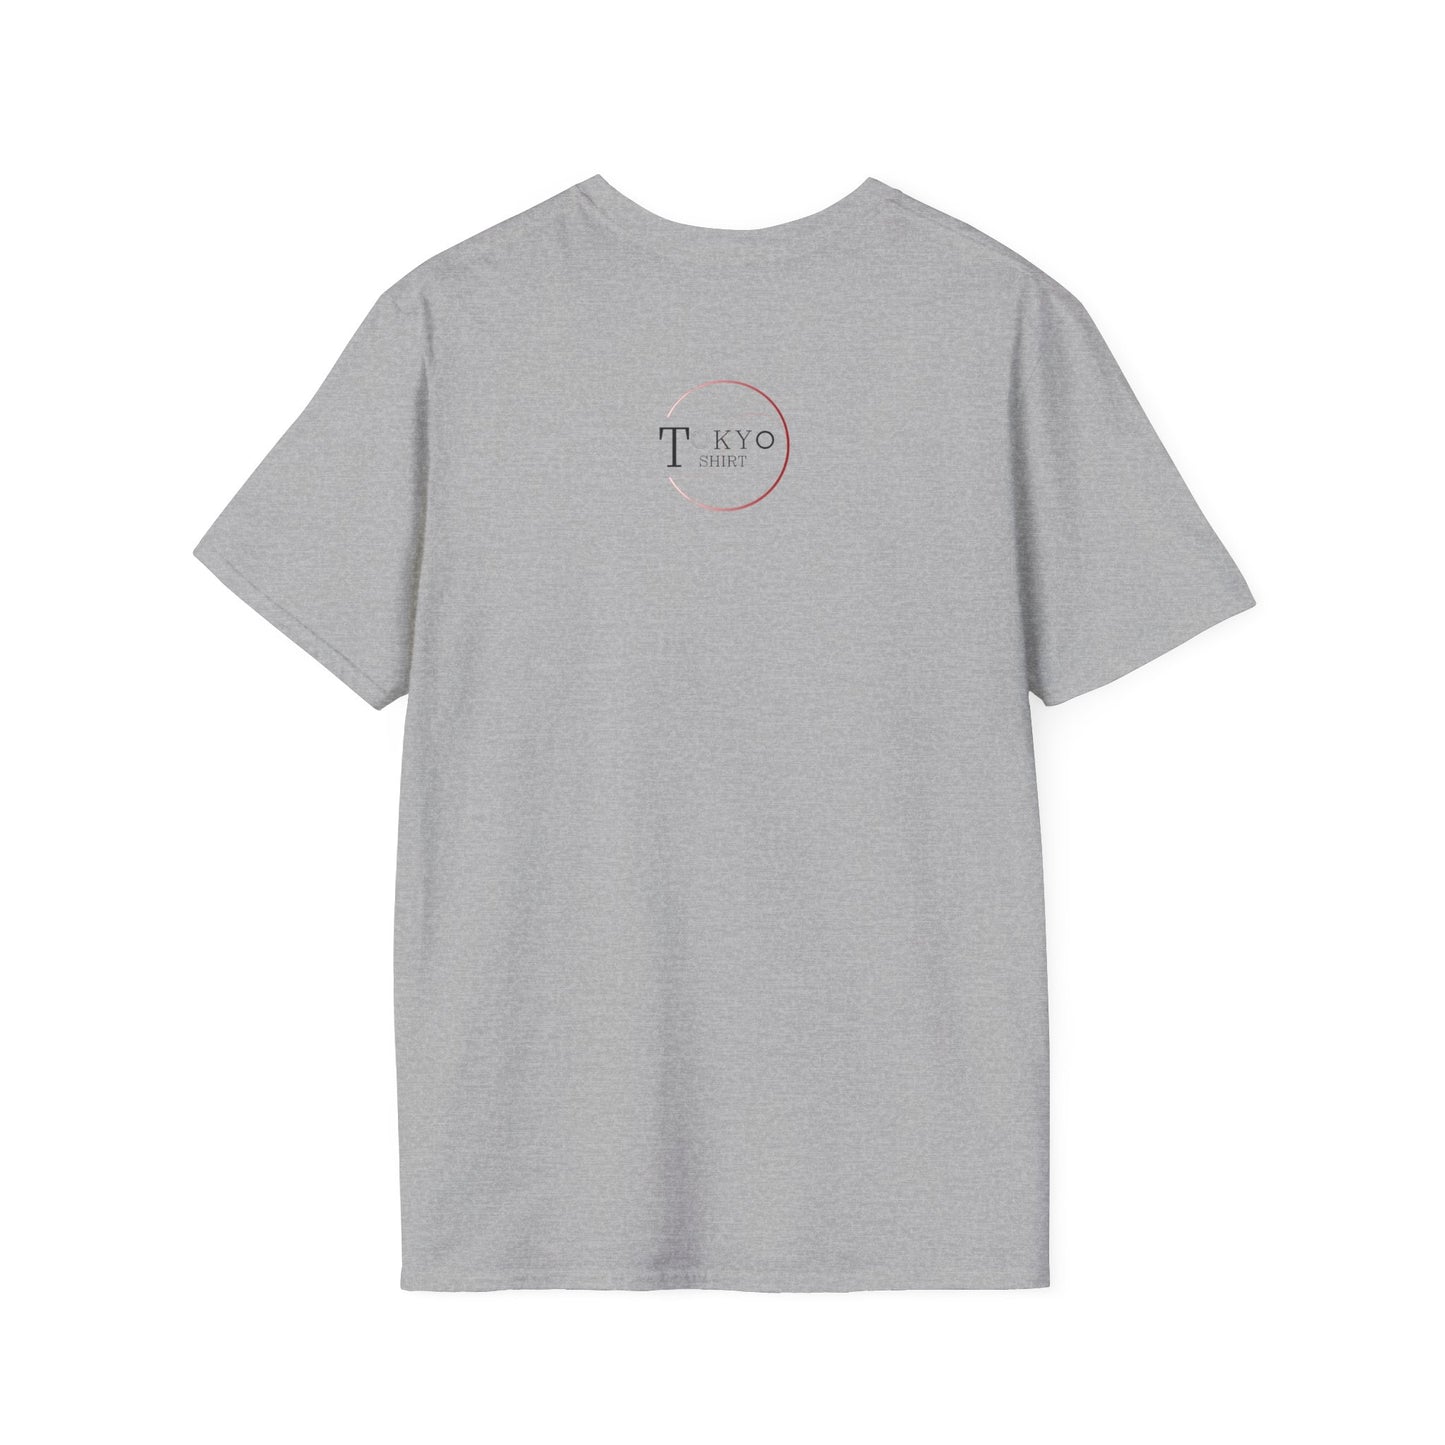 Art Samurai - Unisex Softstyle T-Shirt